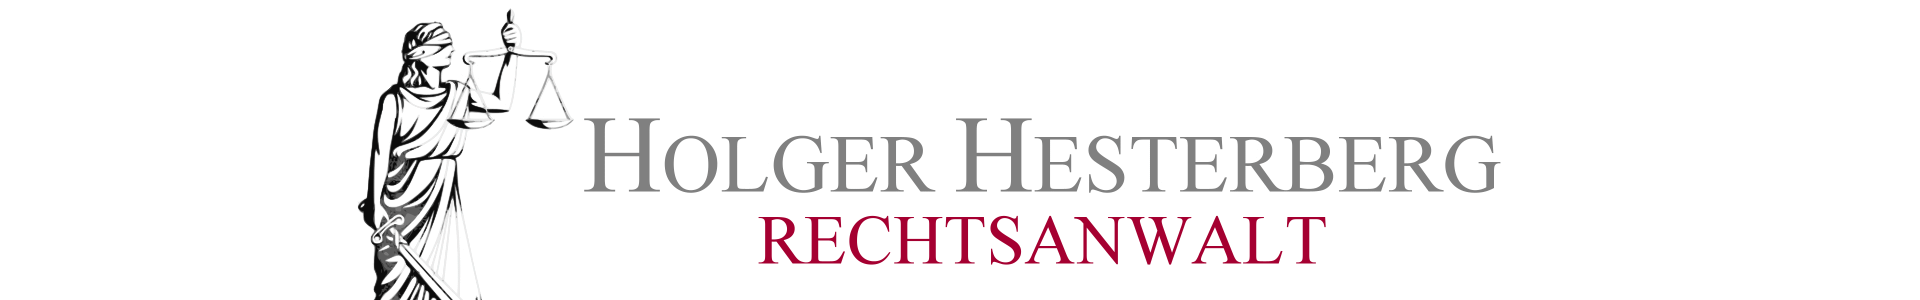 RECHTSANWALT HOLGER HESTERBERG Anwalt in Wolfratshausen